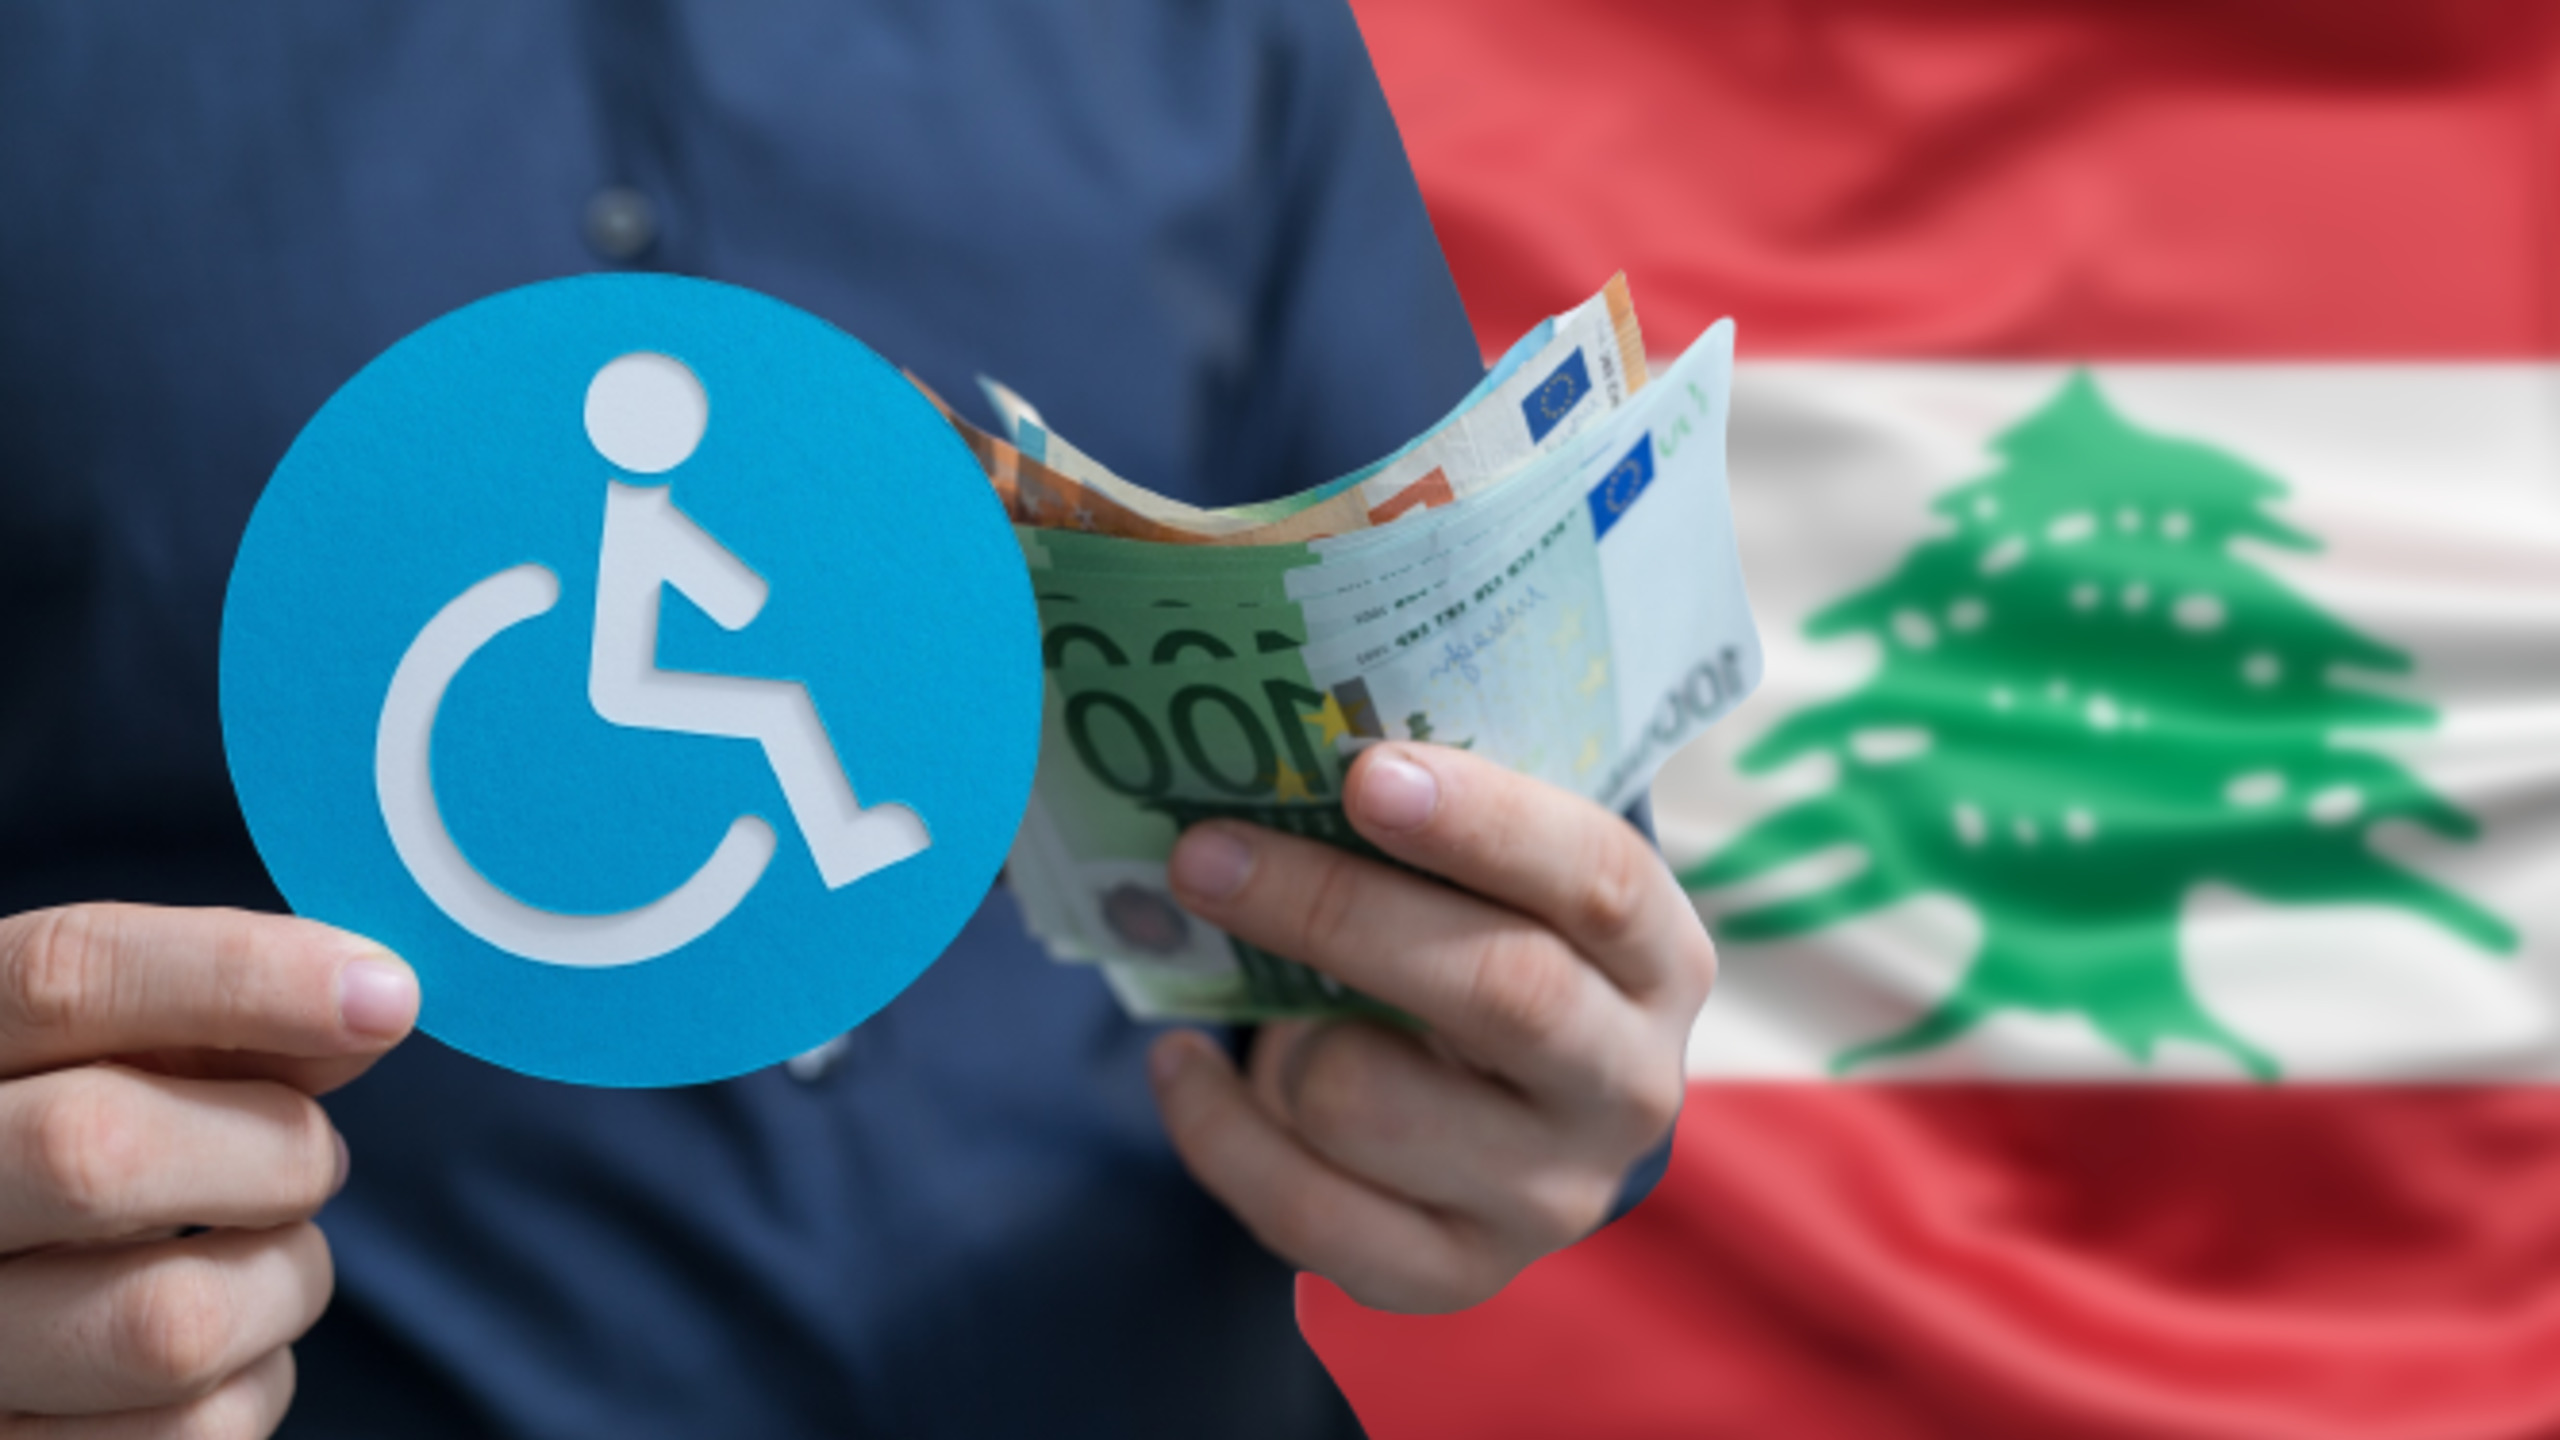 Lebanon Launches National Disability Allowance Program